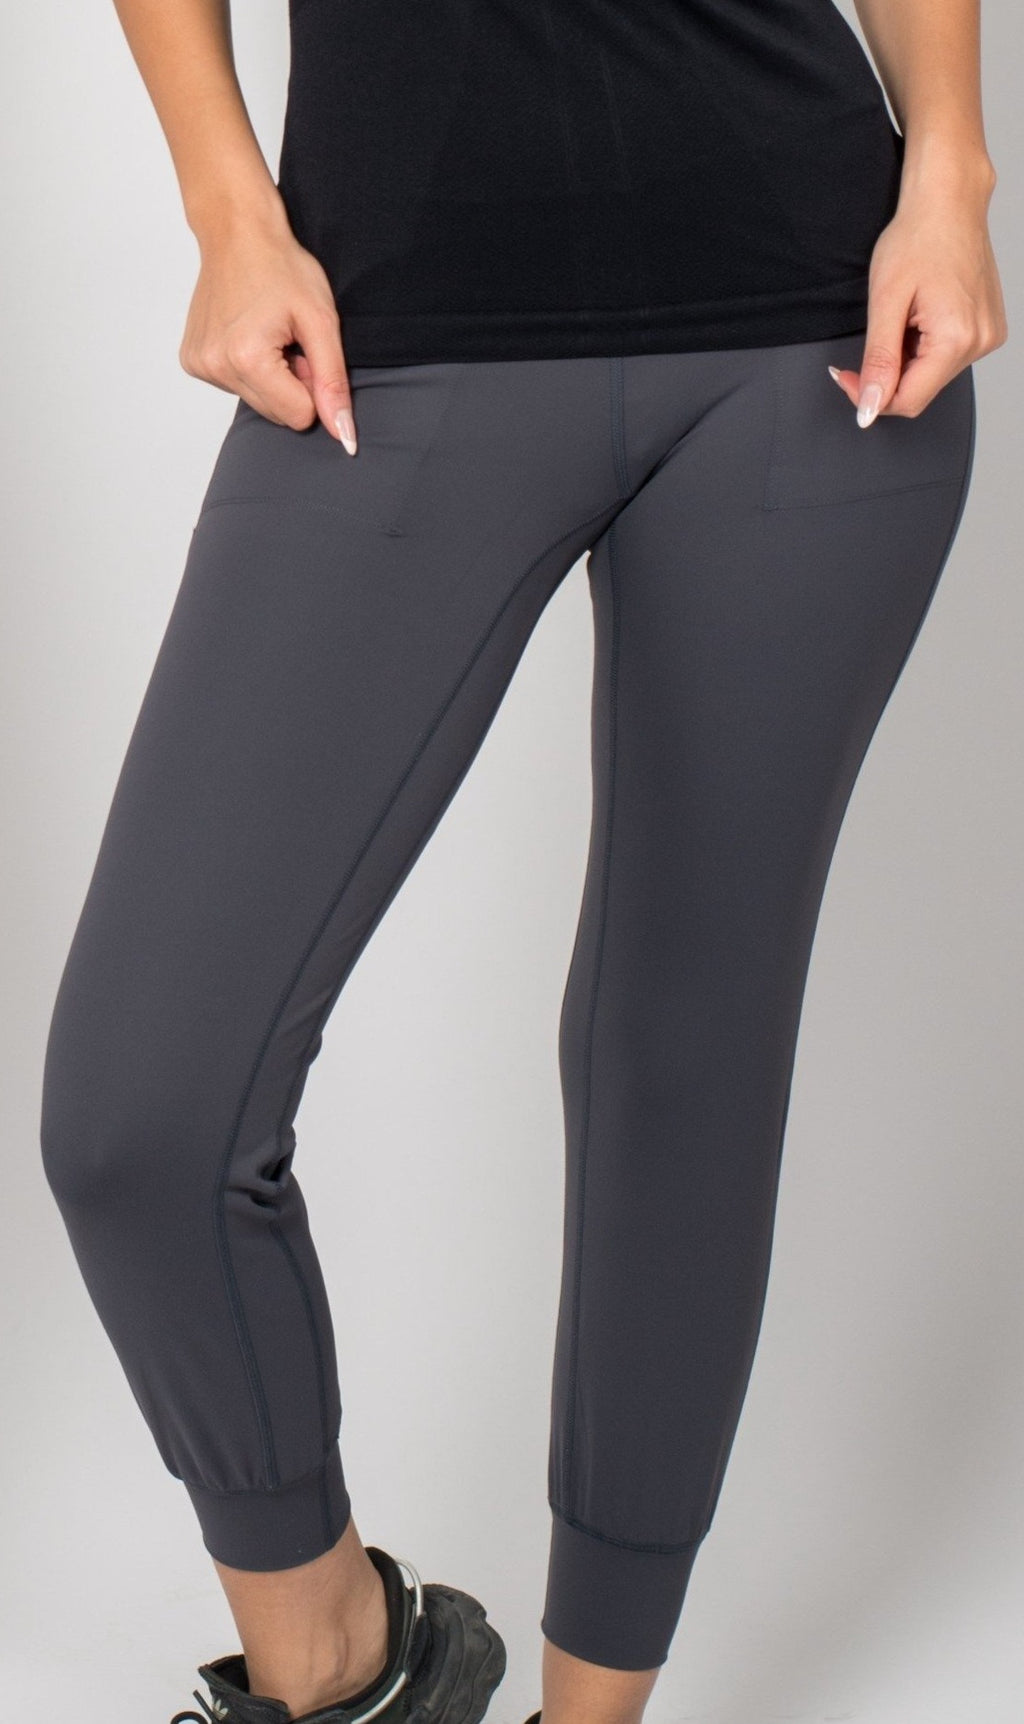 Women grey training pants